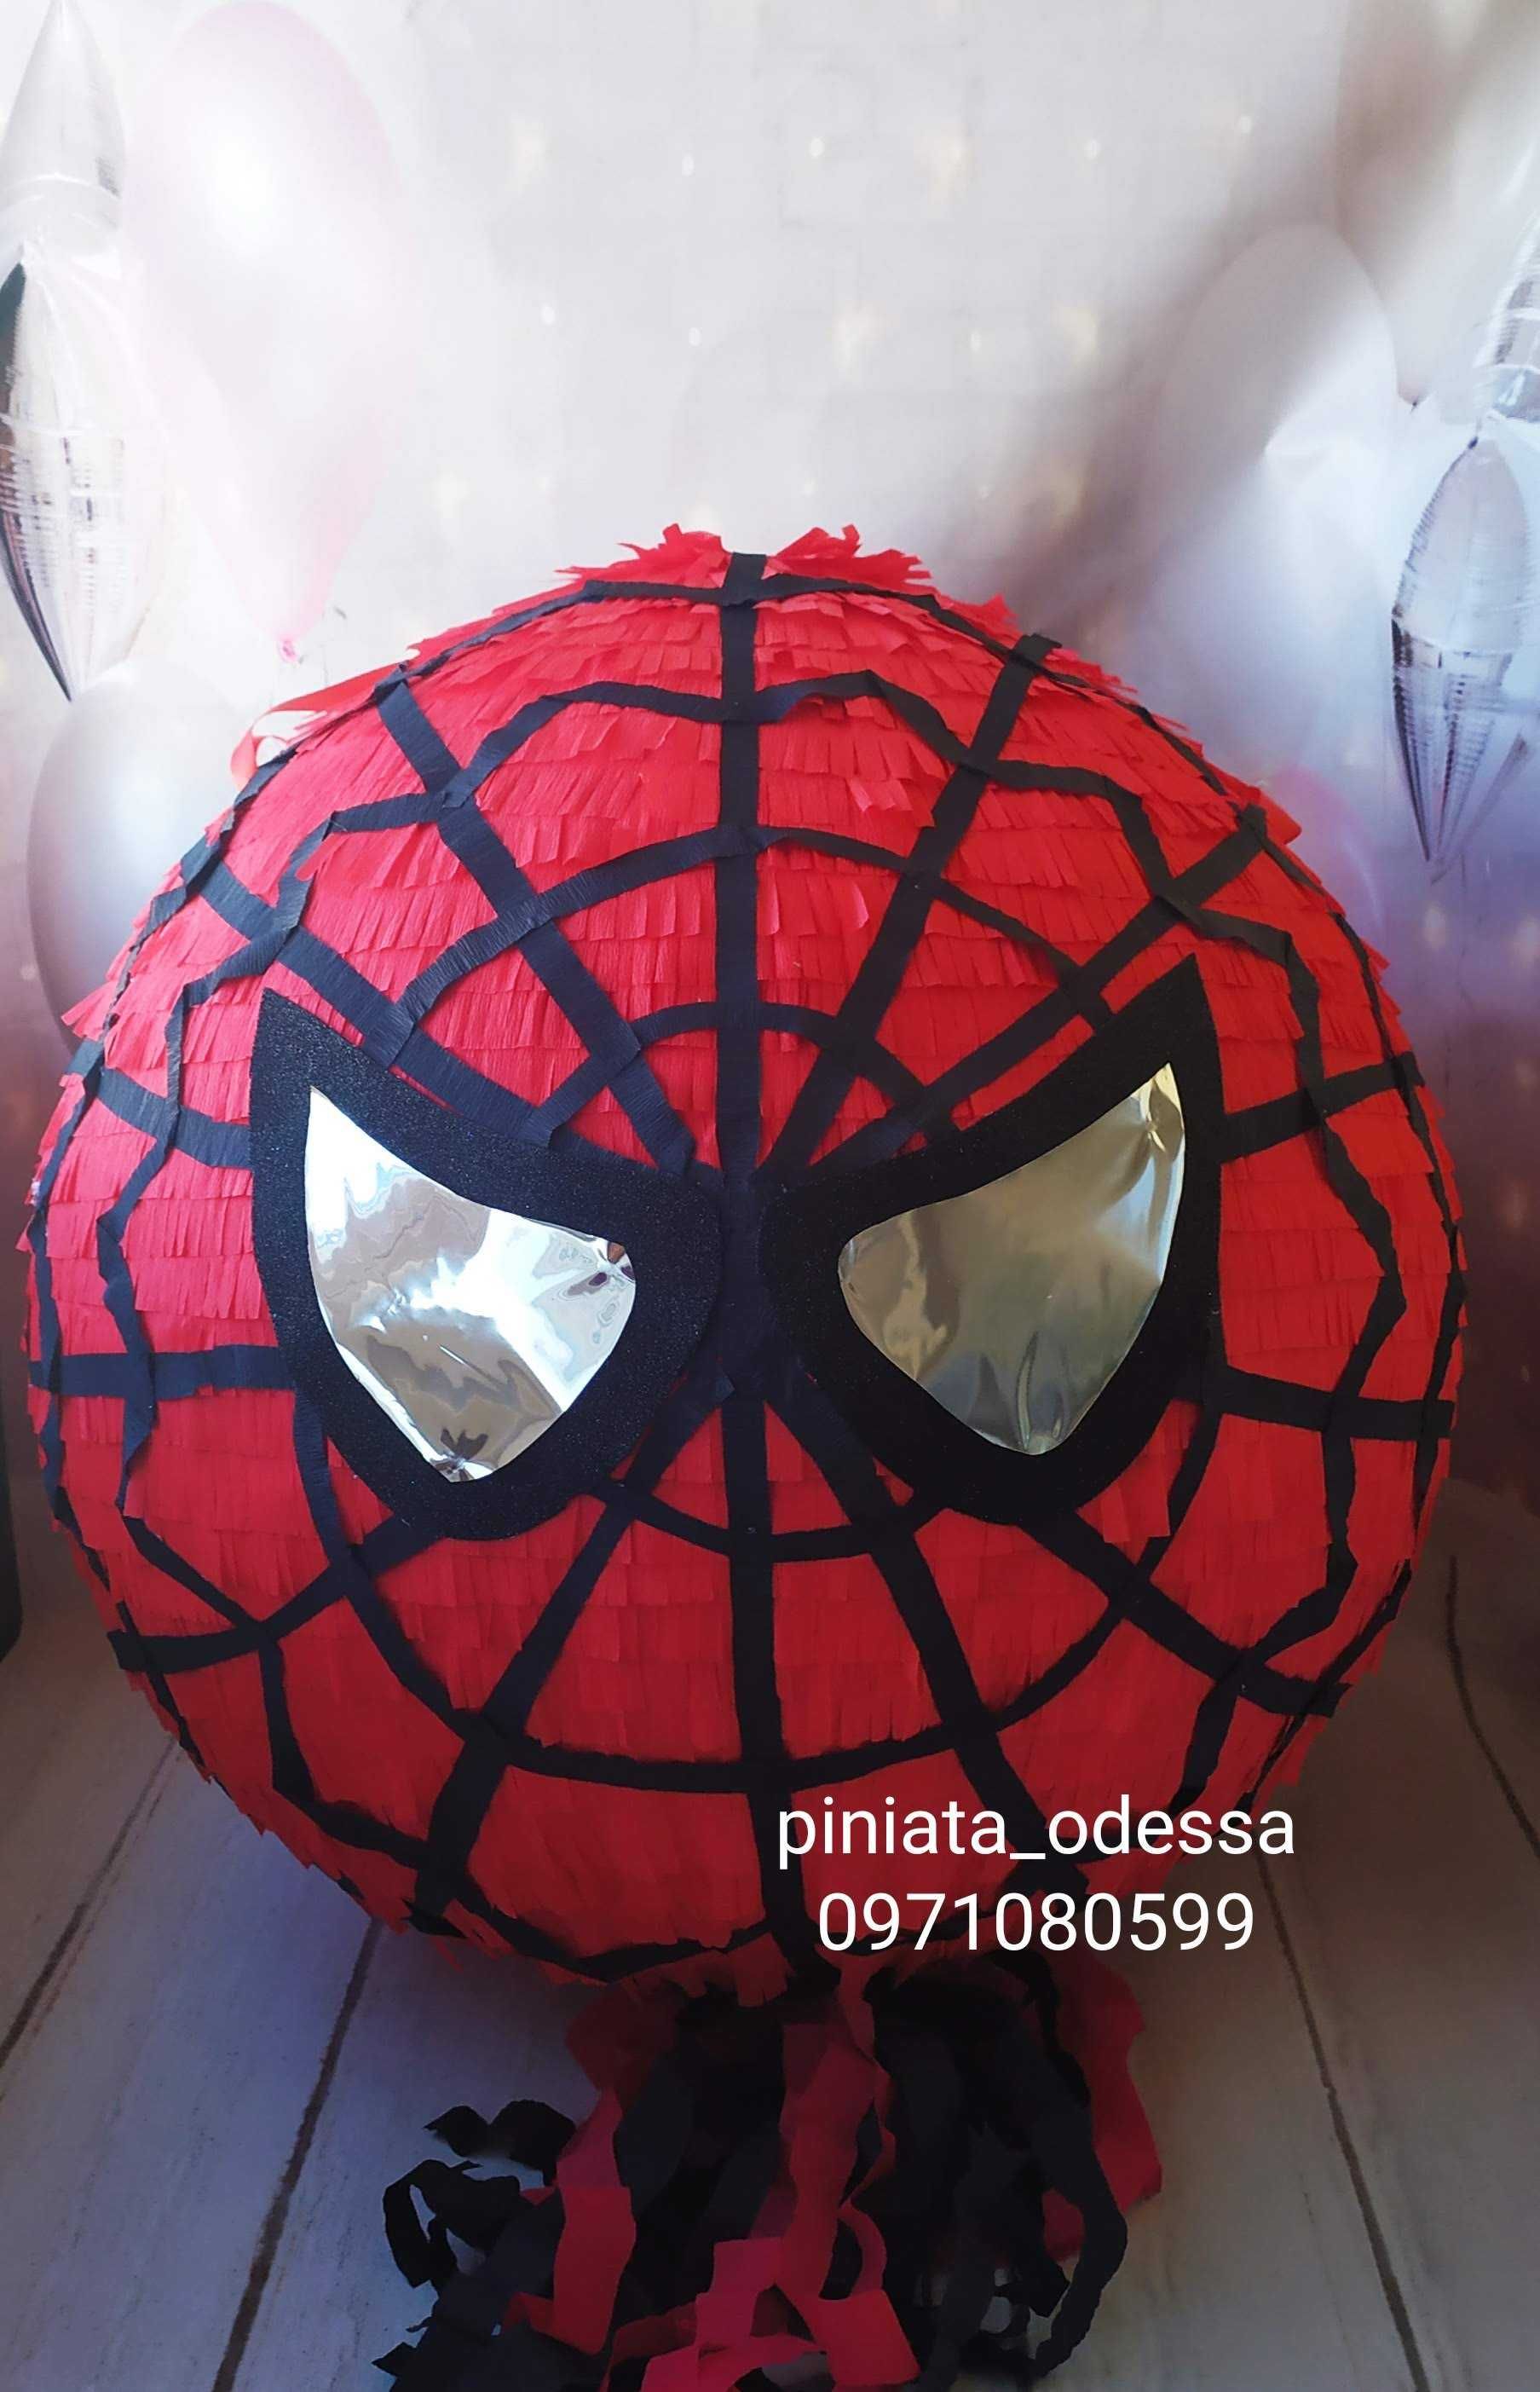 Pinata spiderman